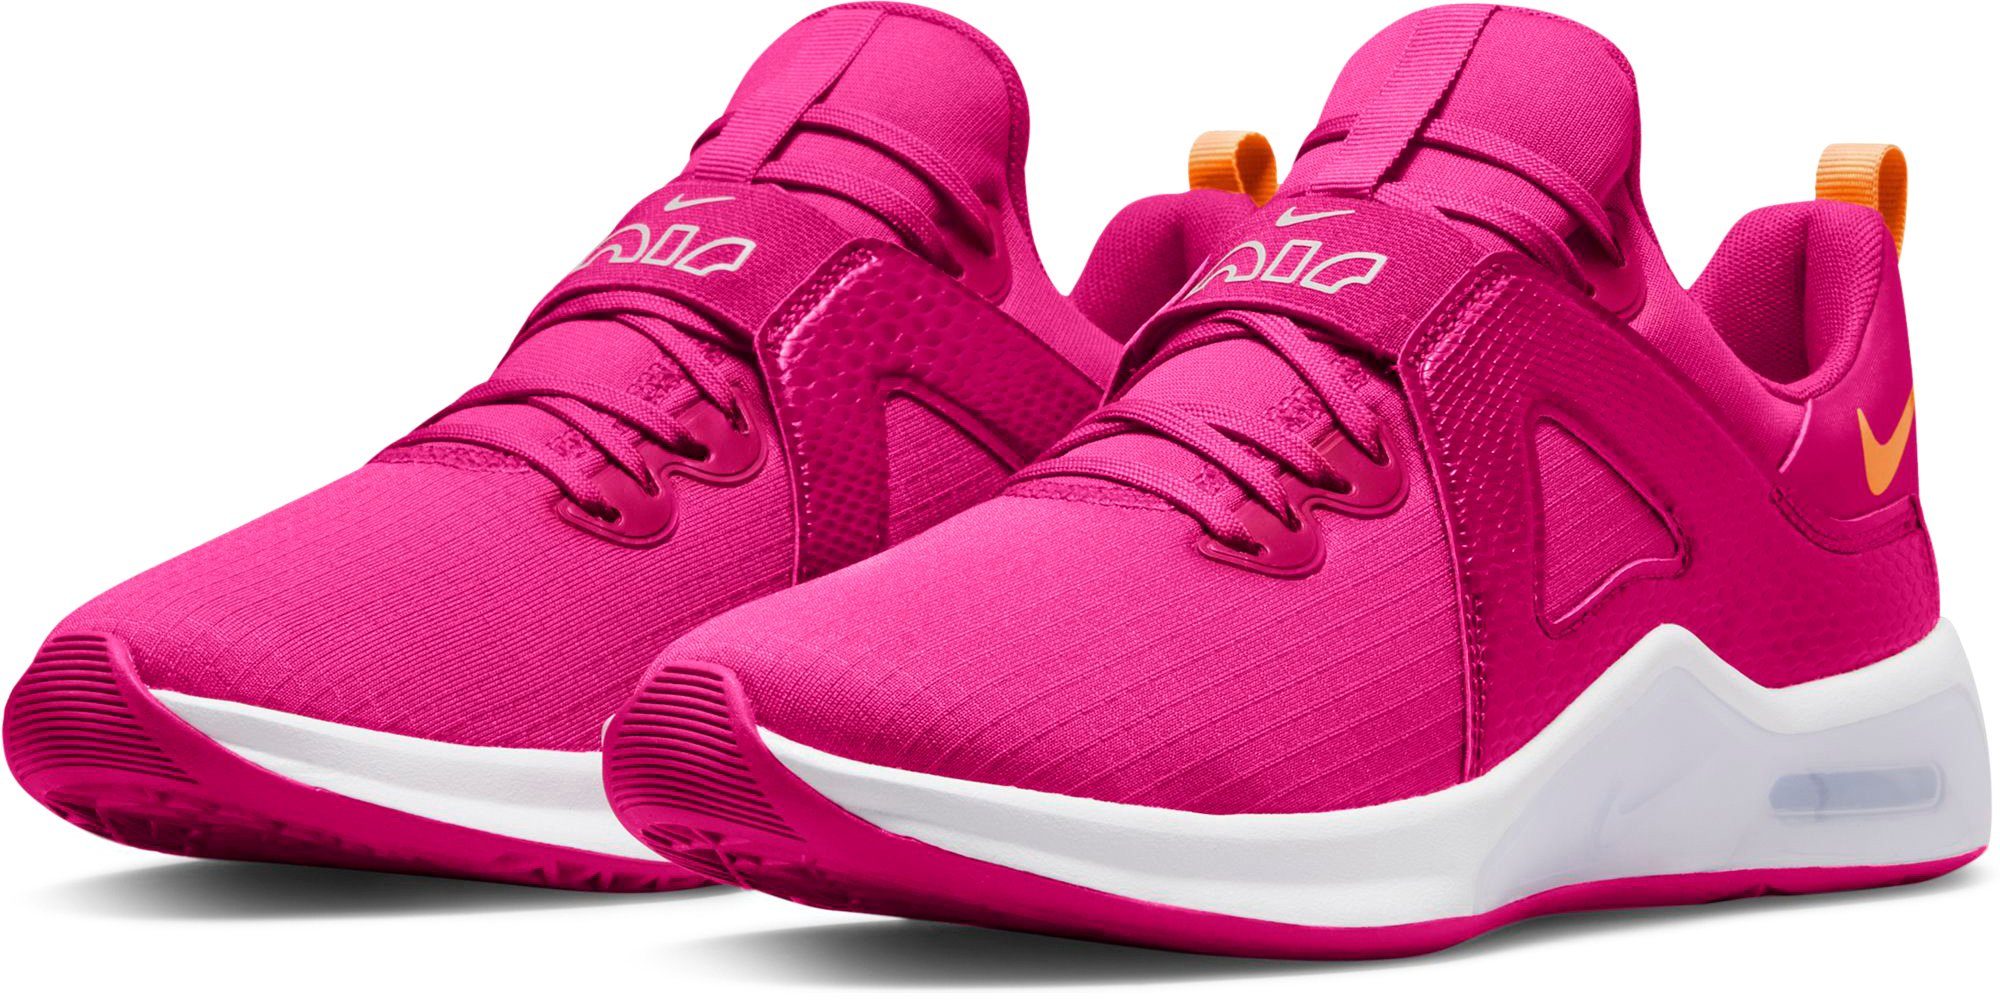 Nike Air Max in pink online kaufen | OTTO